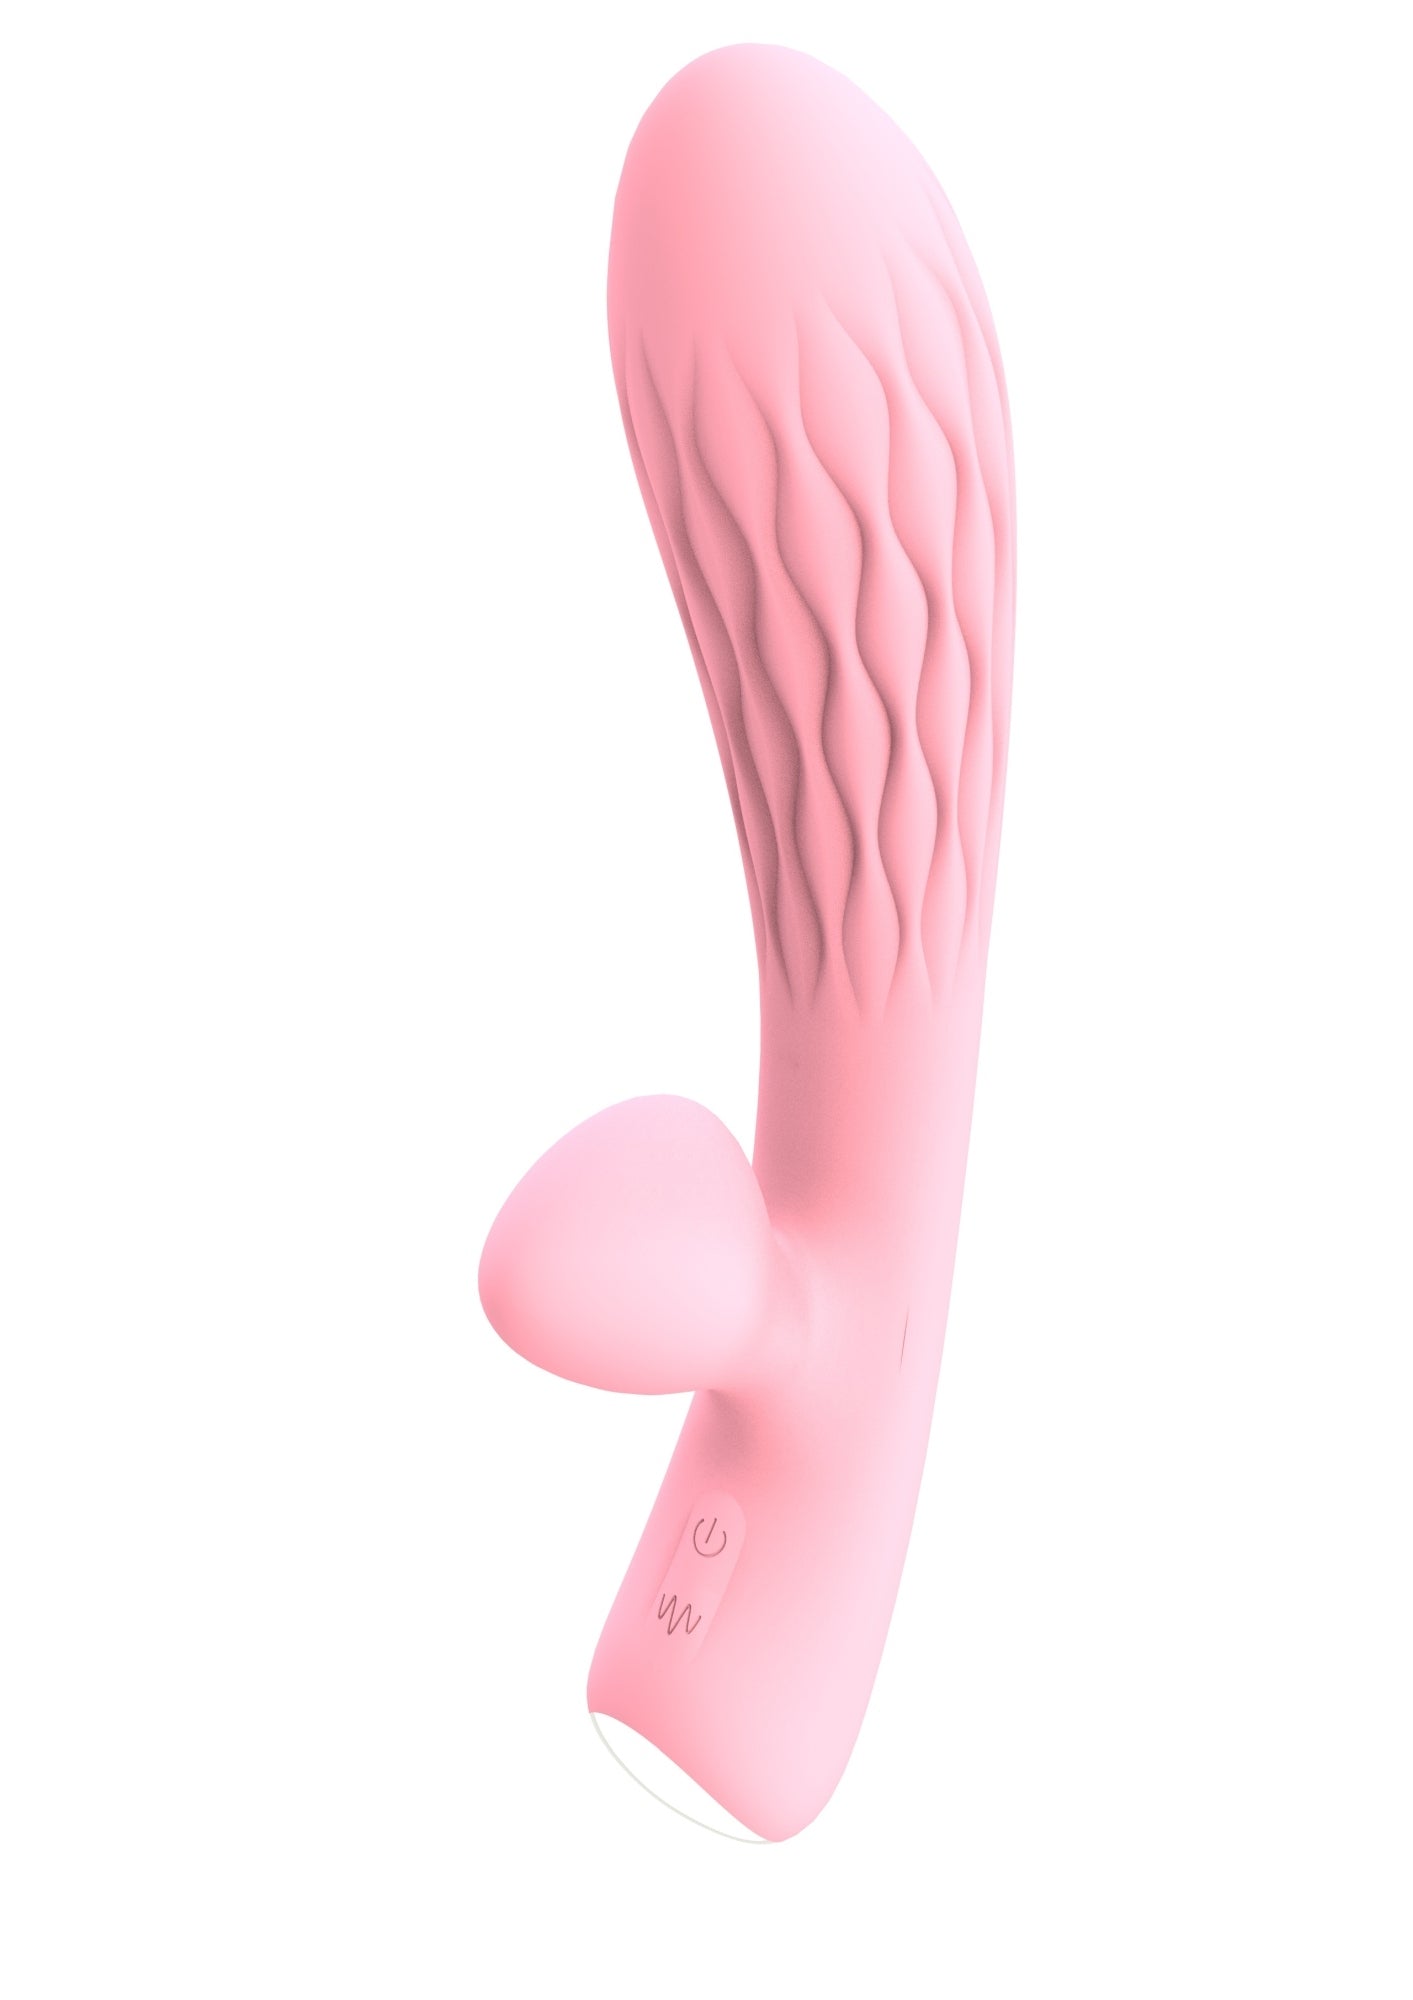 Bossoftoys - 26-00167 - Chelsea  G Spot & Clitoris Vibrator - 36 Function - Pink